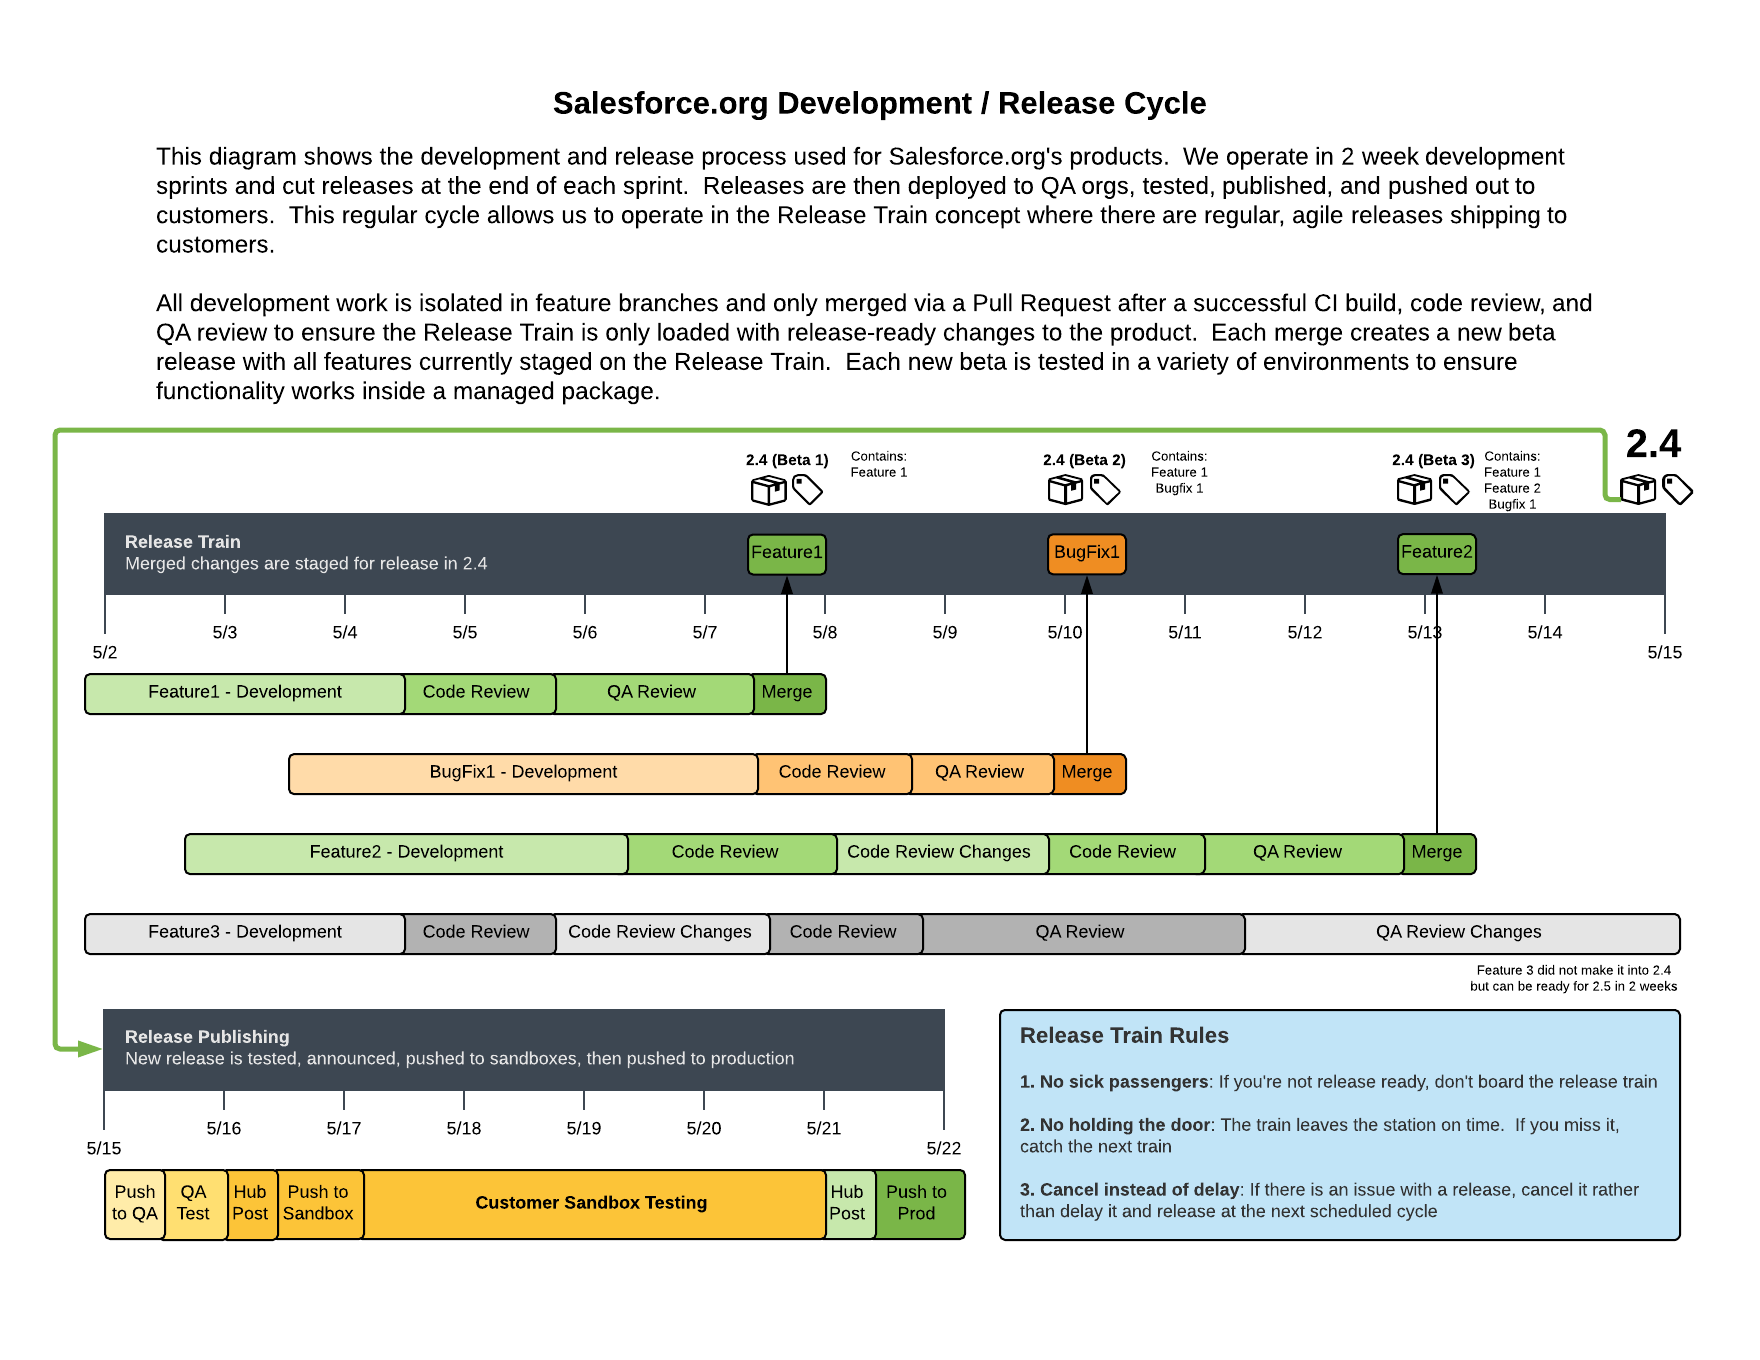 Salesforce.org Dev/Release Process Diagram